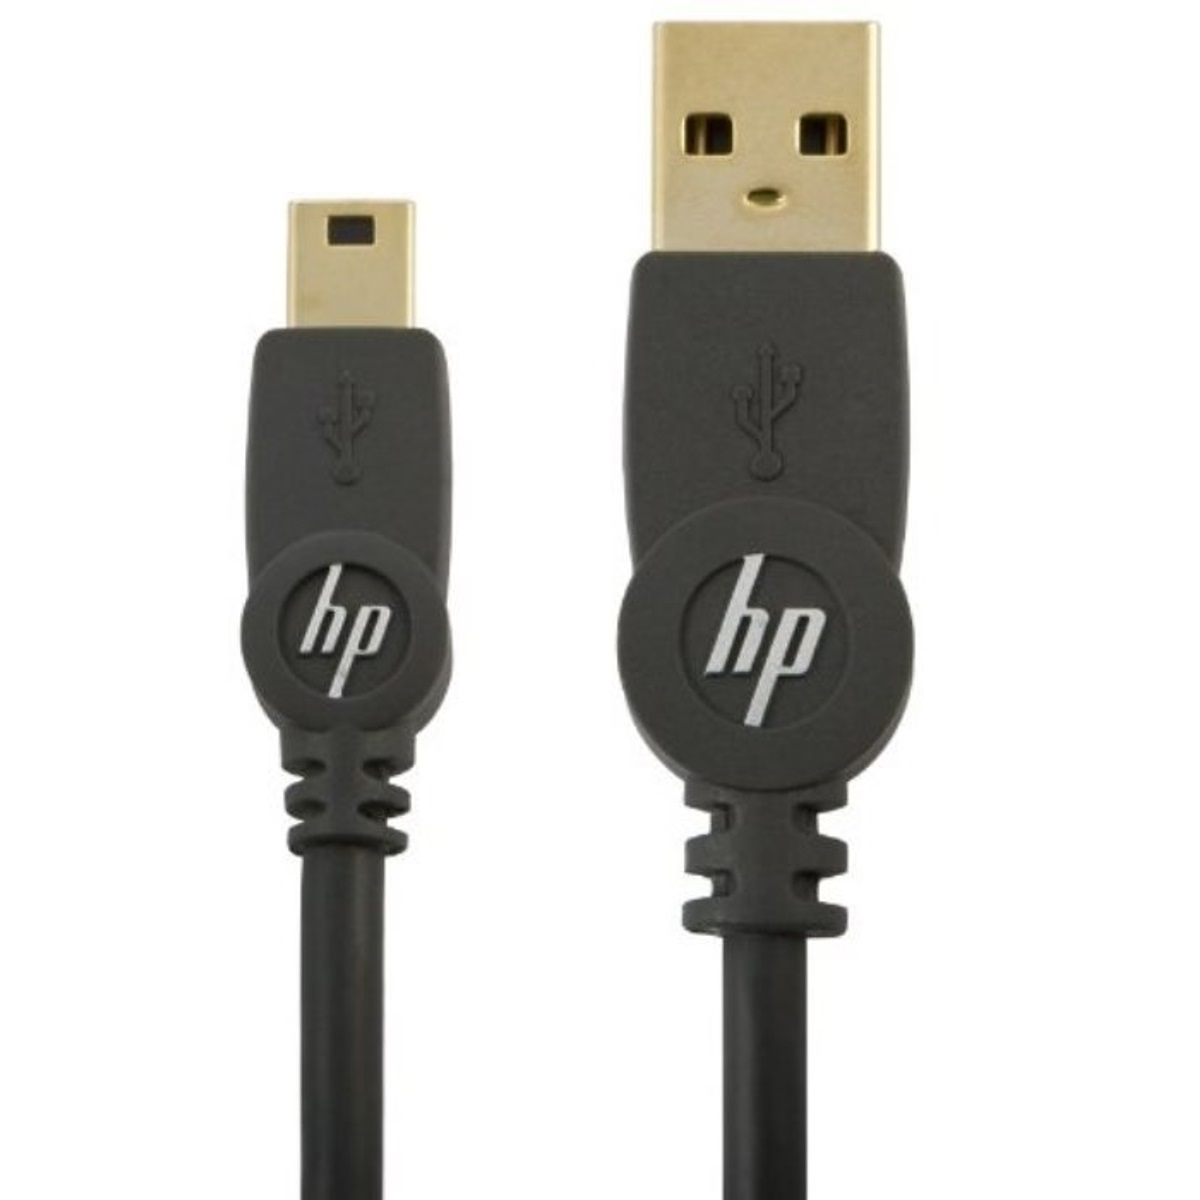 HP 0,9m CABLE MONSTER Schwarz Mini-USB High-Speed Mini-USB-Kabel Kabel,